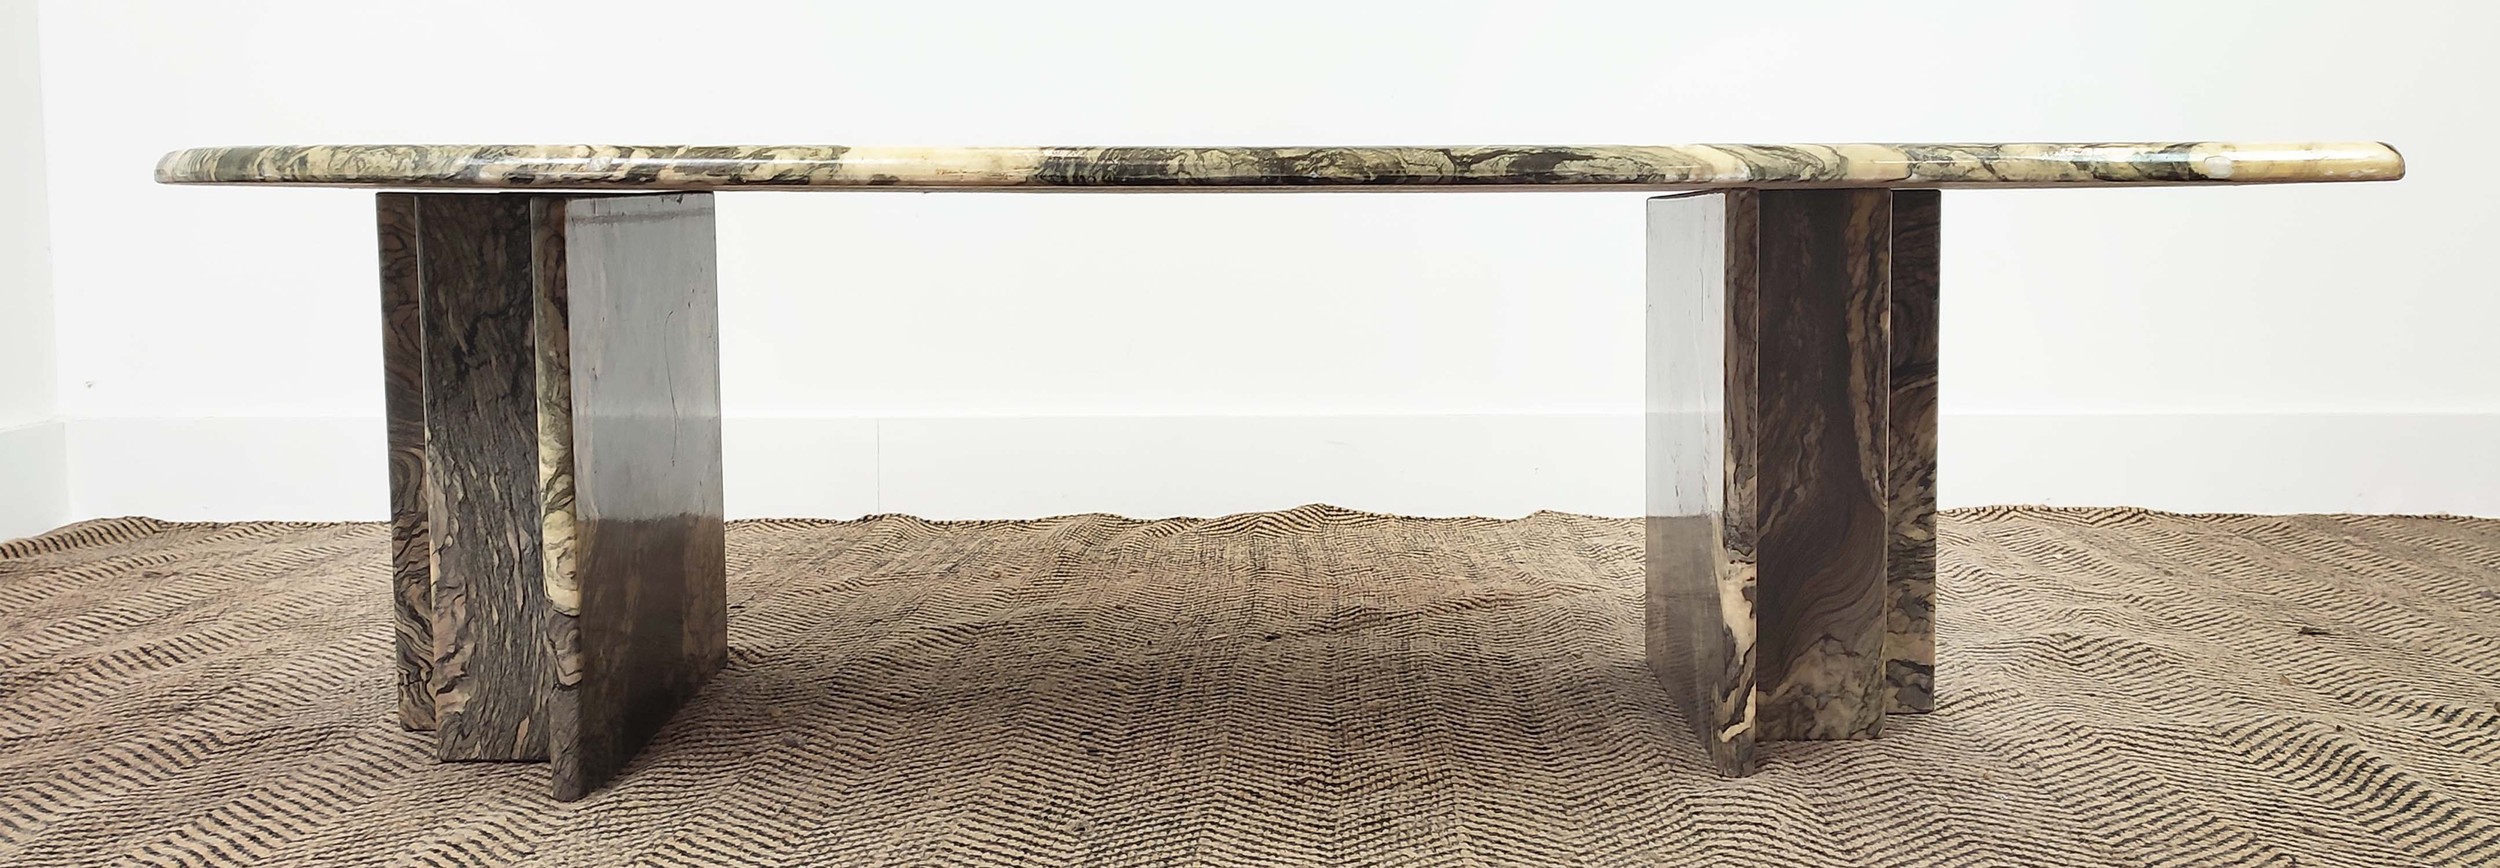 COFFEE TABLE,1970s Italian marble, 37cm H x 123cm x 64cm. - Image 3 of 7